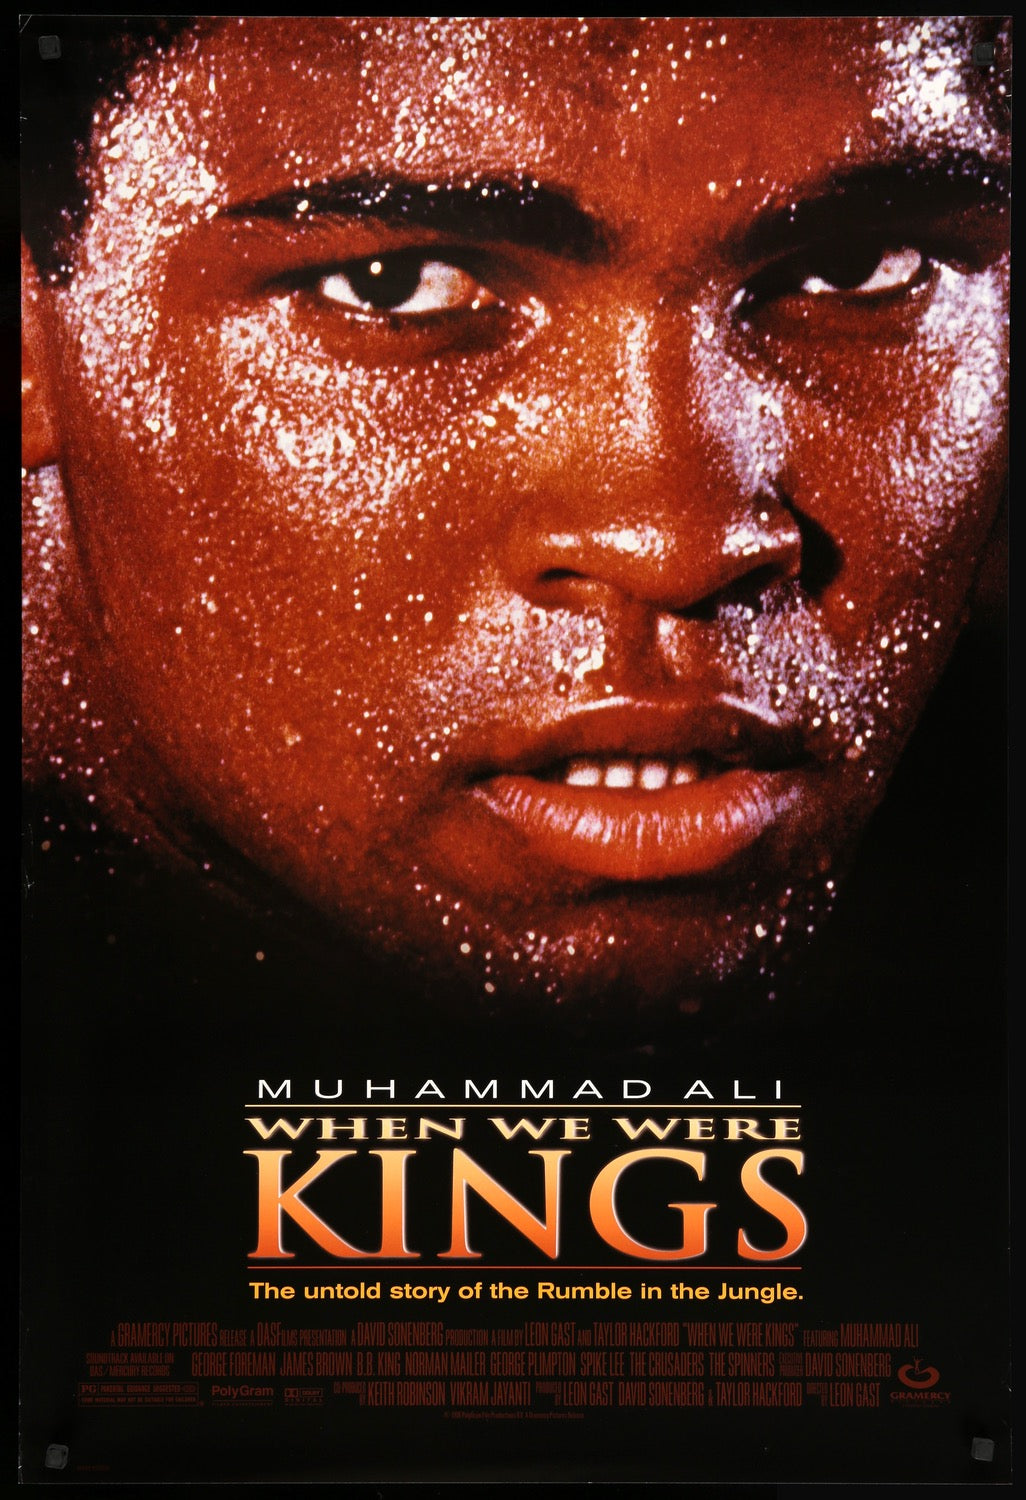 When We Were Kings (1996) original movie poster for sale at Original Film Art